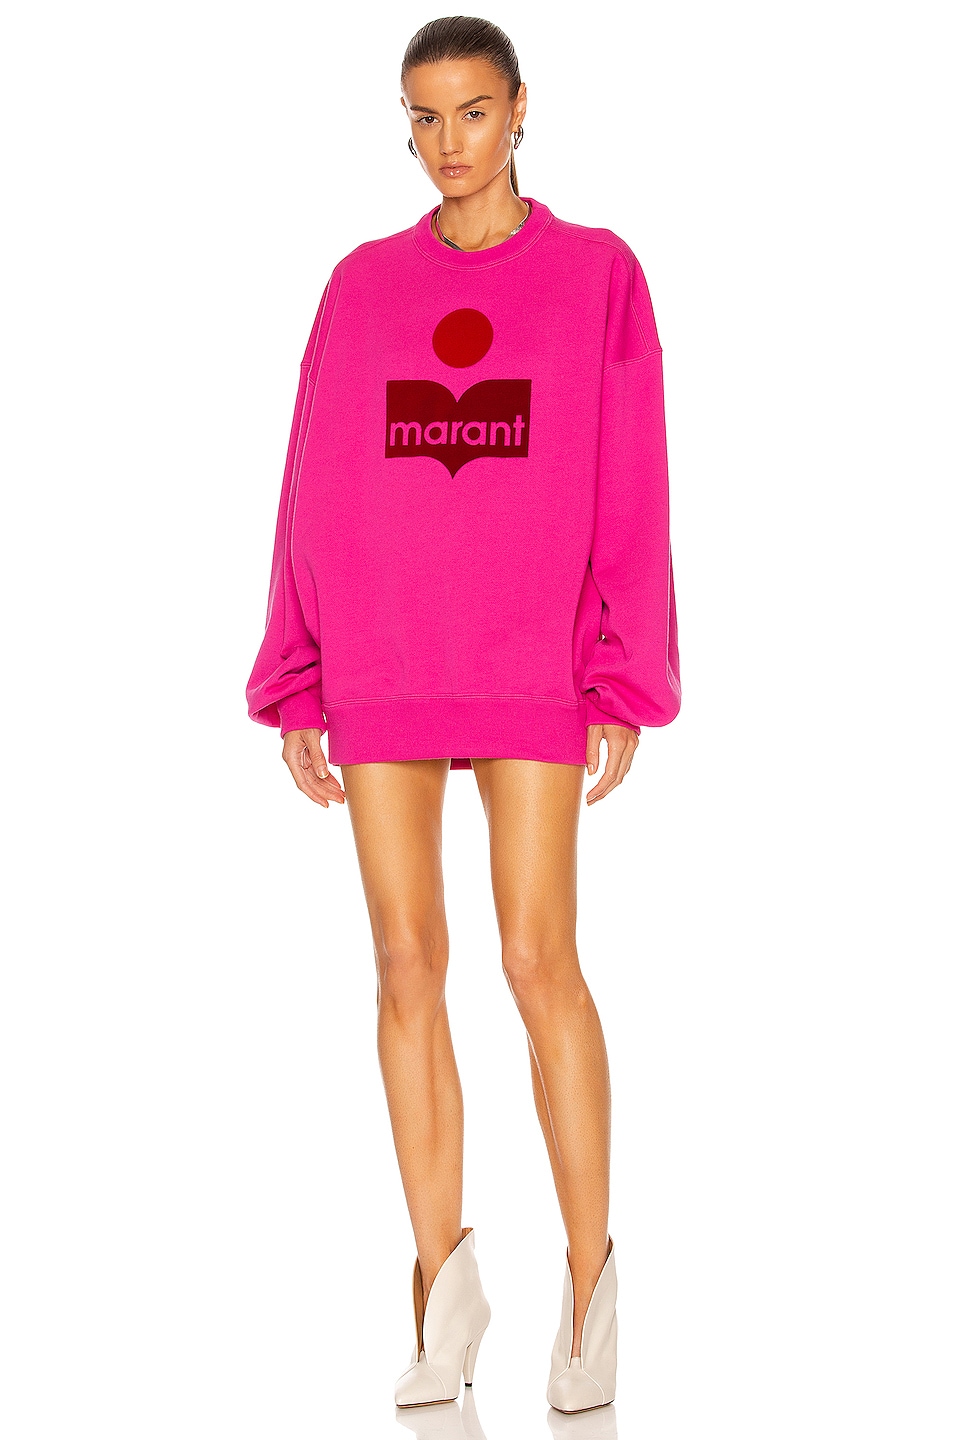 Isabel Marant Etoile Mindy Sweatshirt in Neon Pink | FWRD